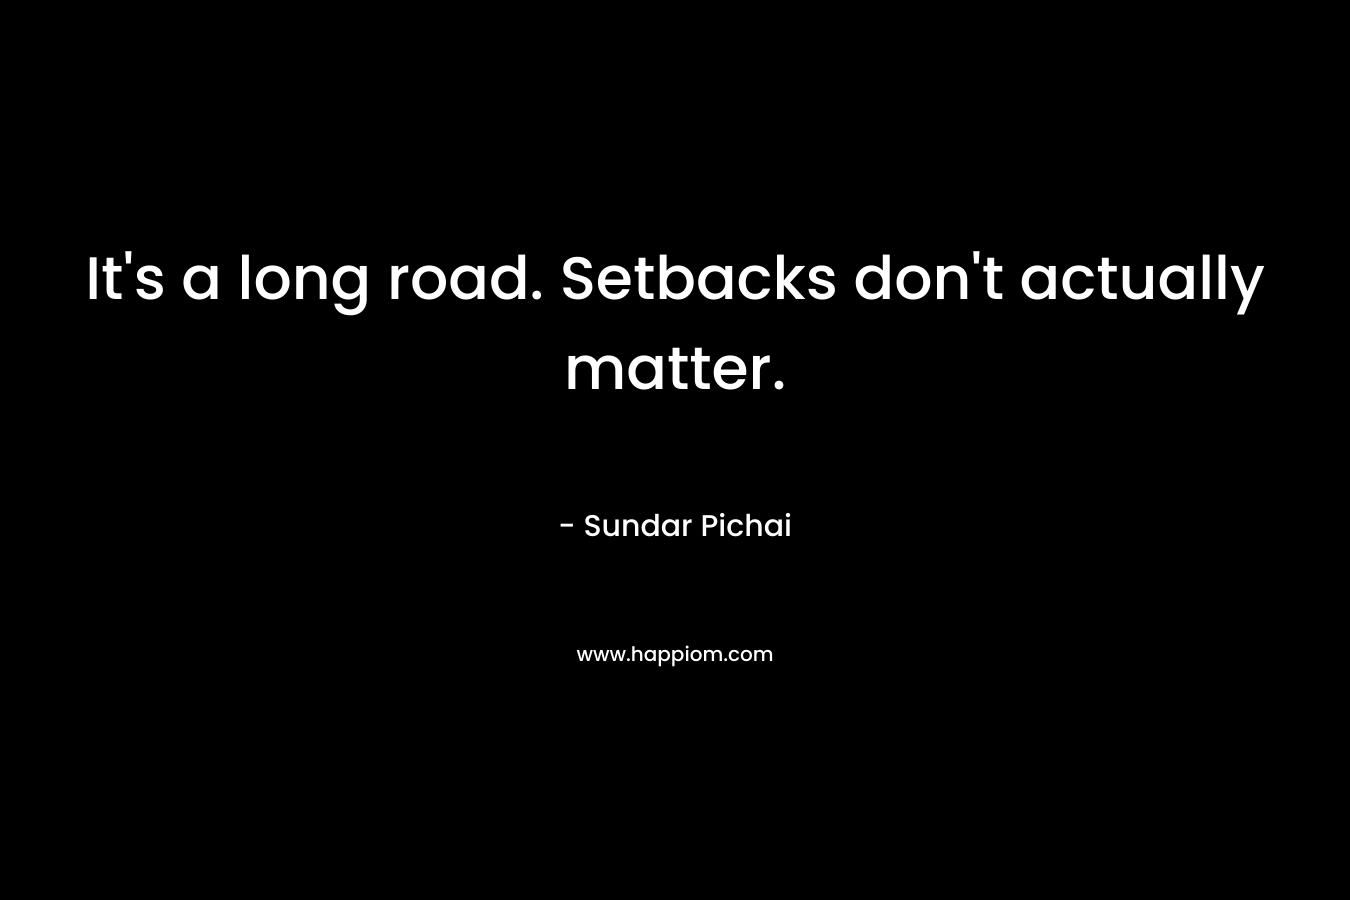 It's a long road. Setbacks don't actually matter.